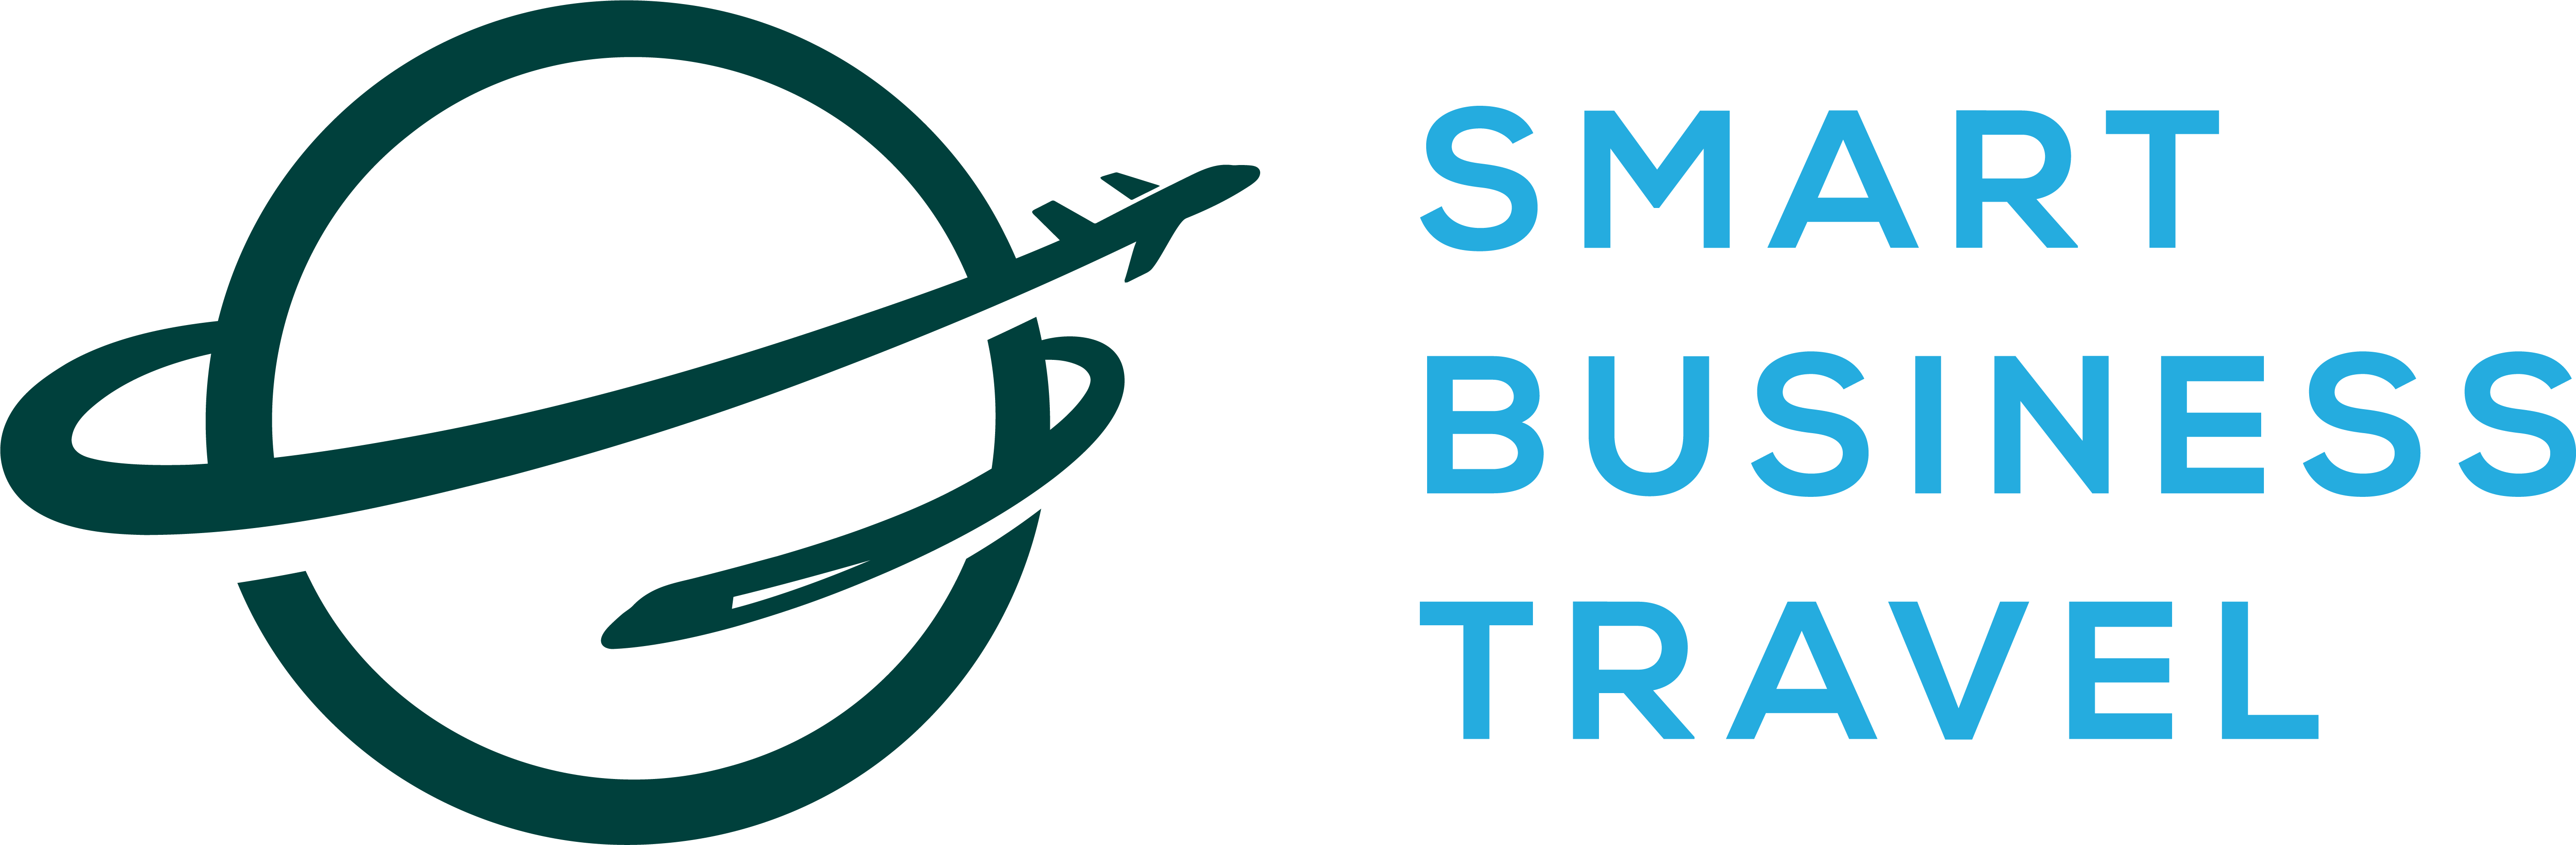 Smart Business Travel